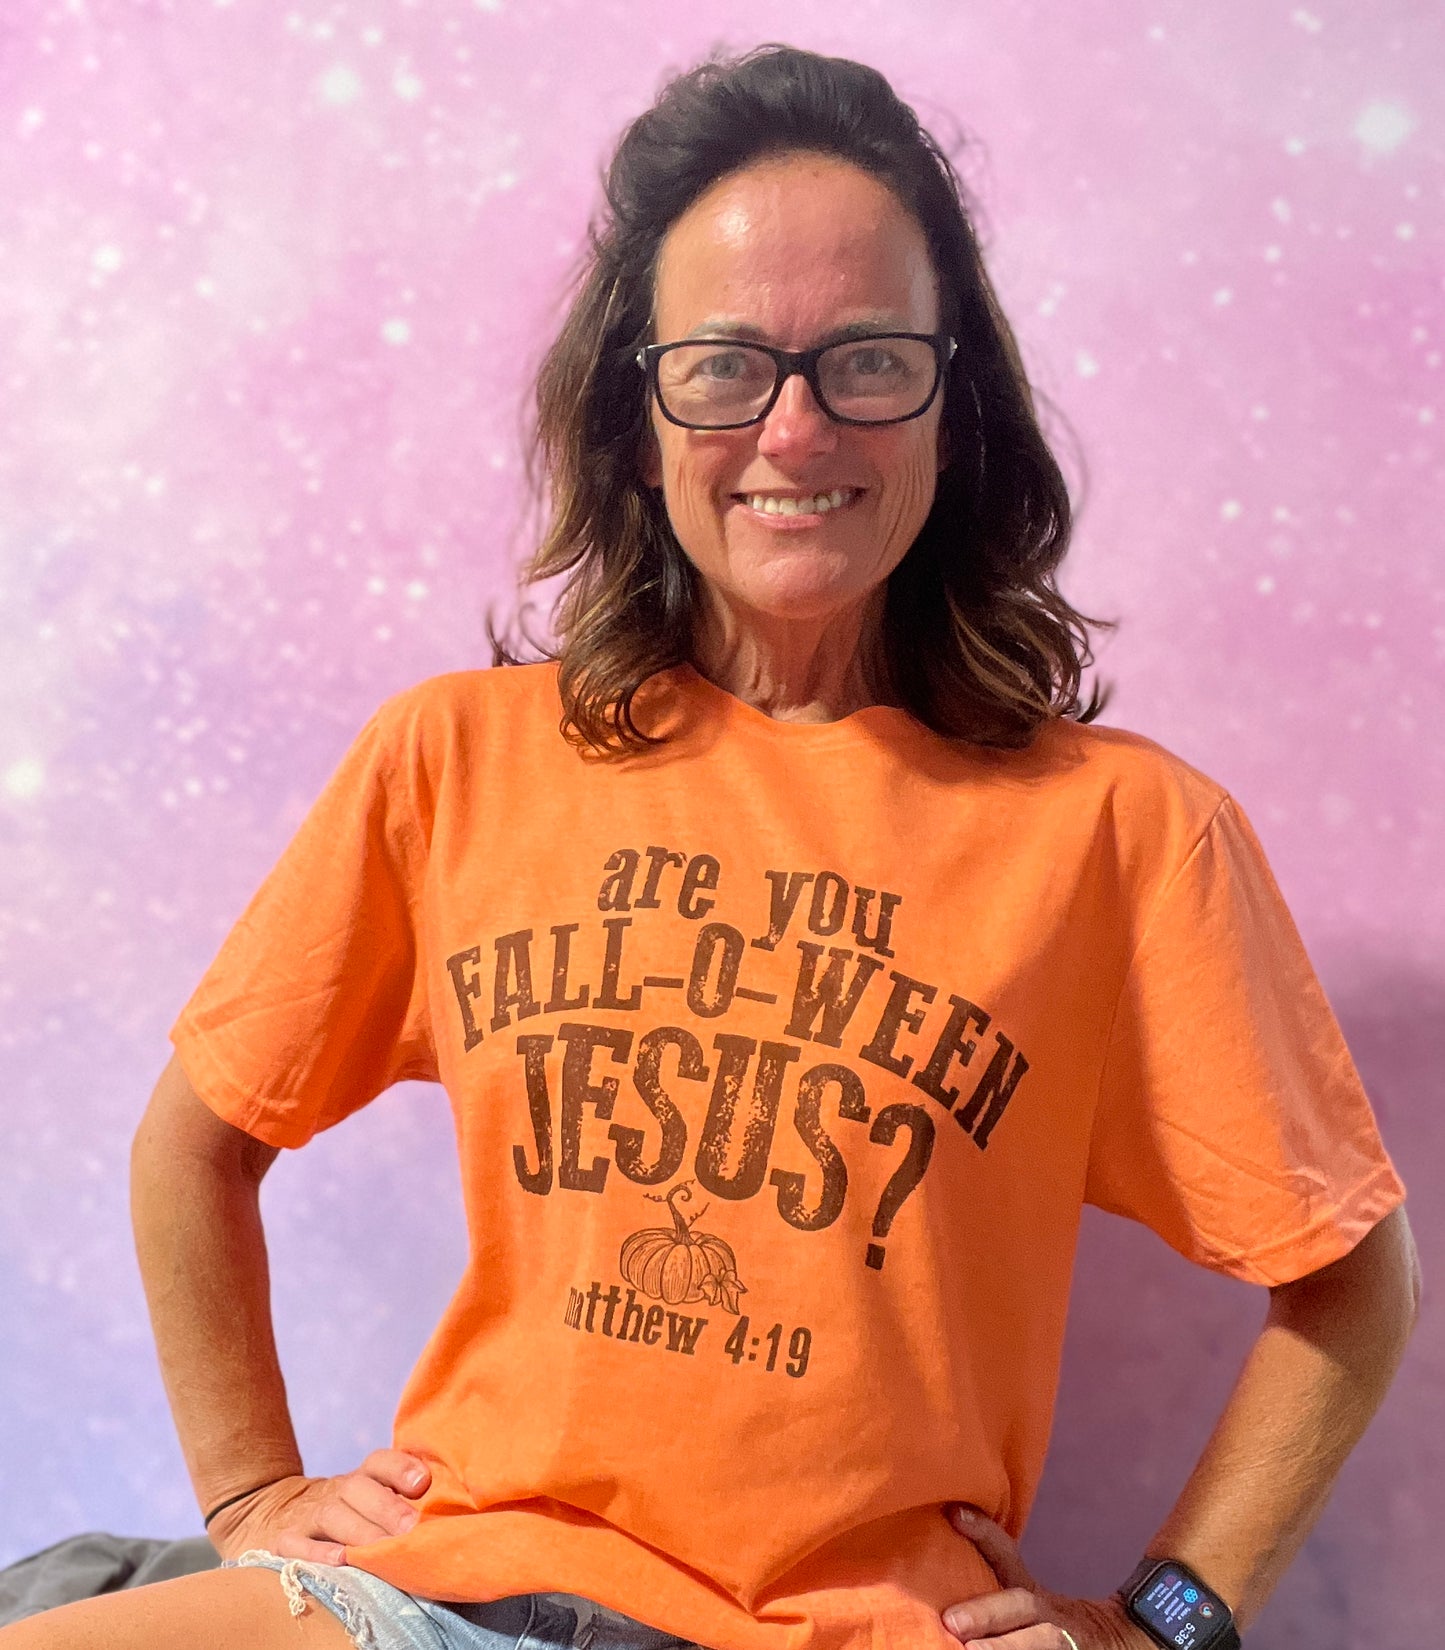 Fall-o-ween Jesus